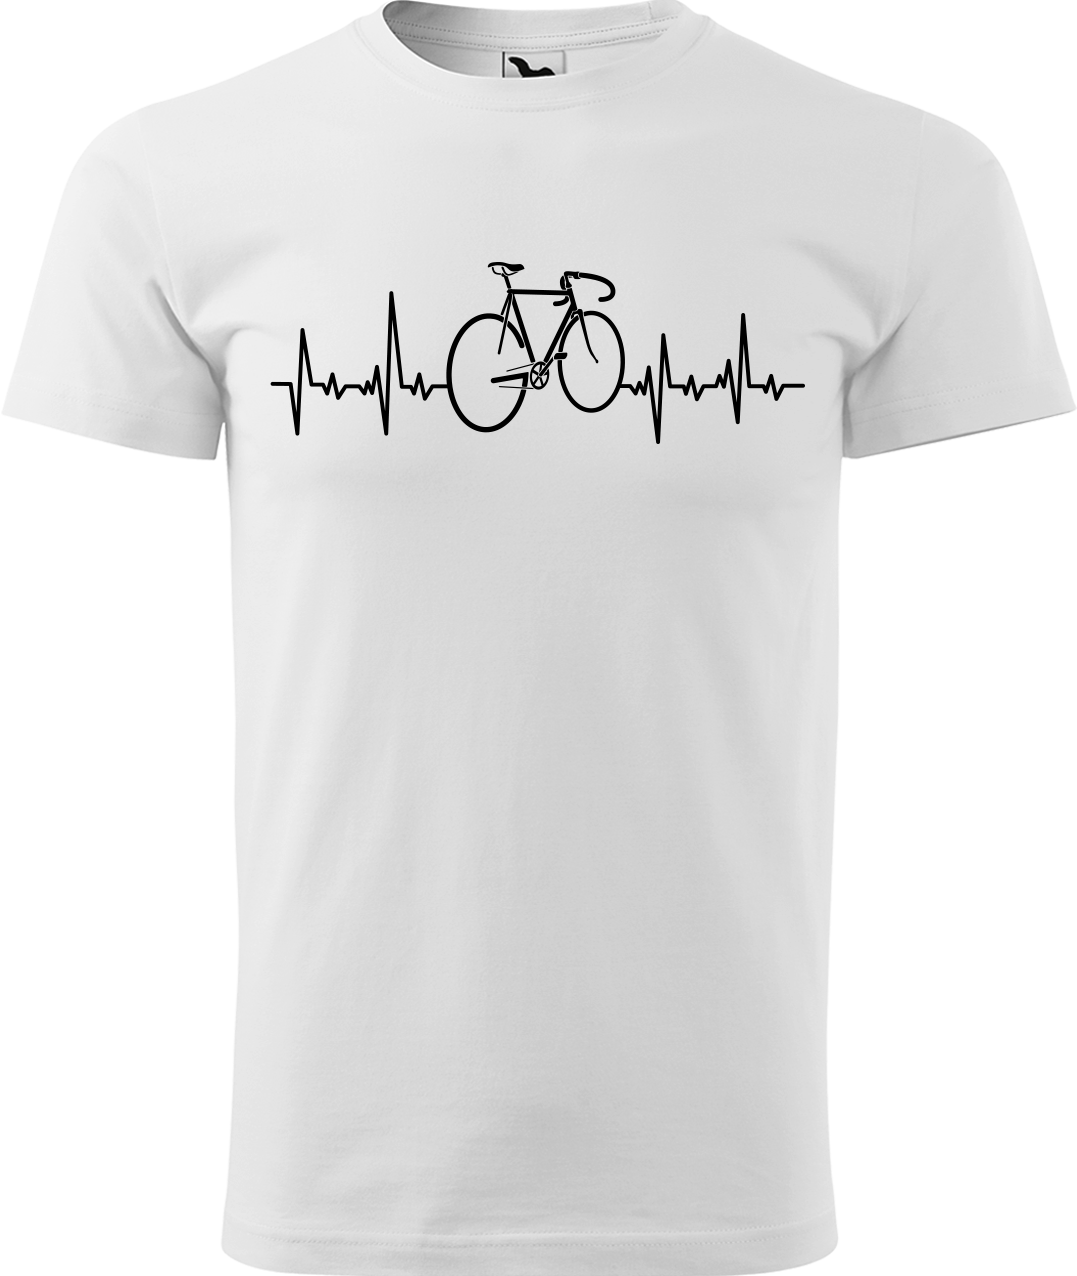 Pánské tričko s kolem - Cyklistův kardiogram Velikost: S, Barva: Bílá (00)